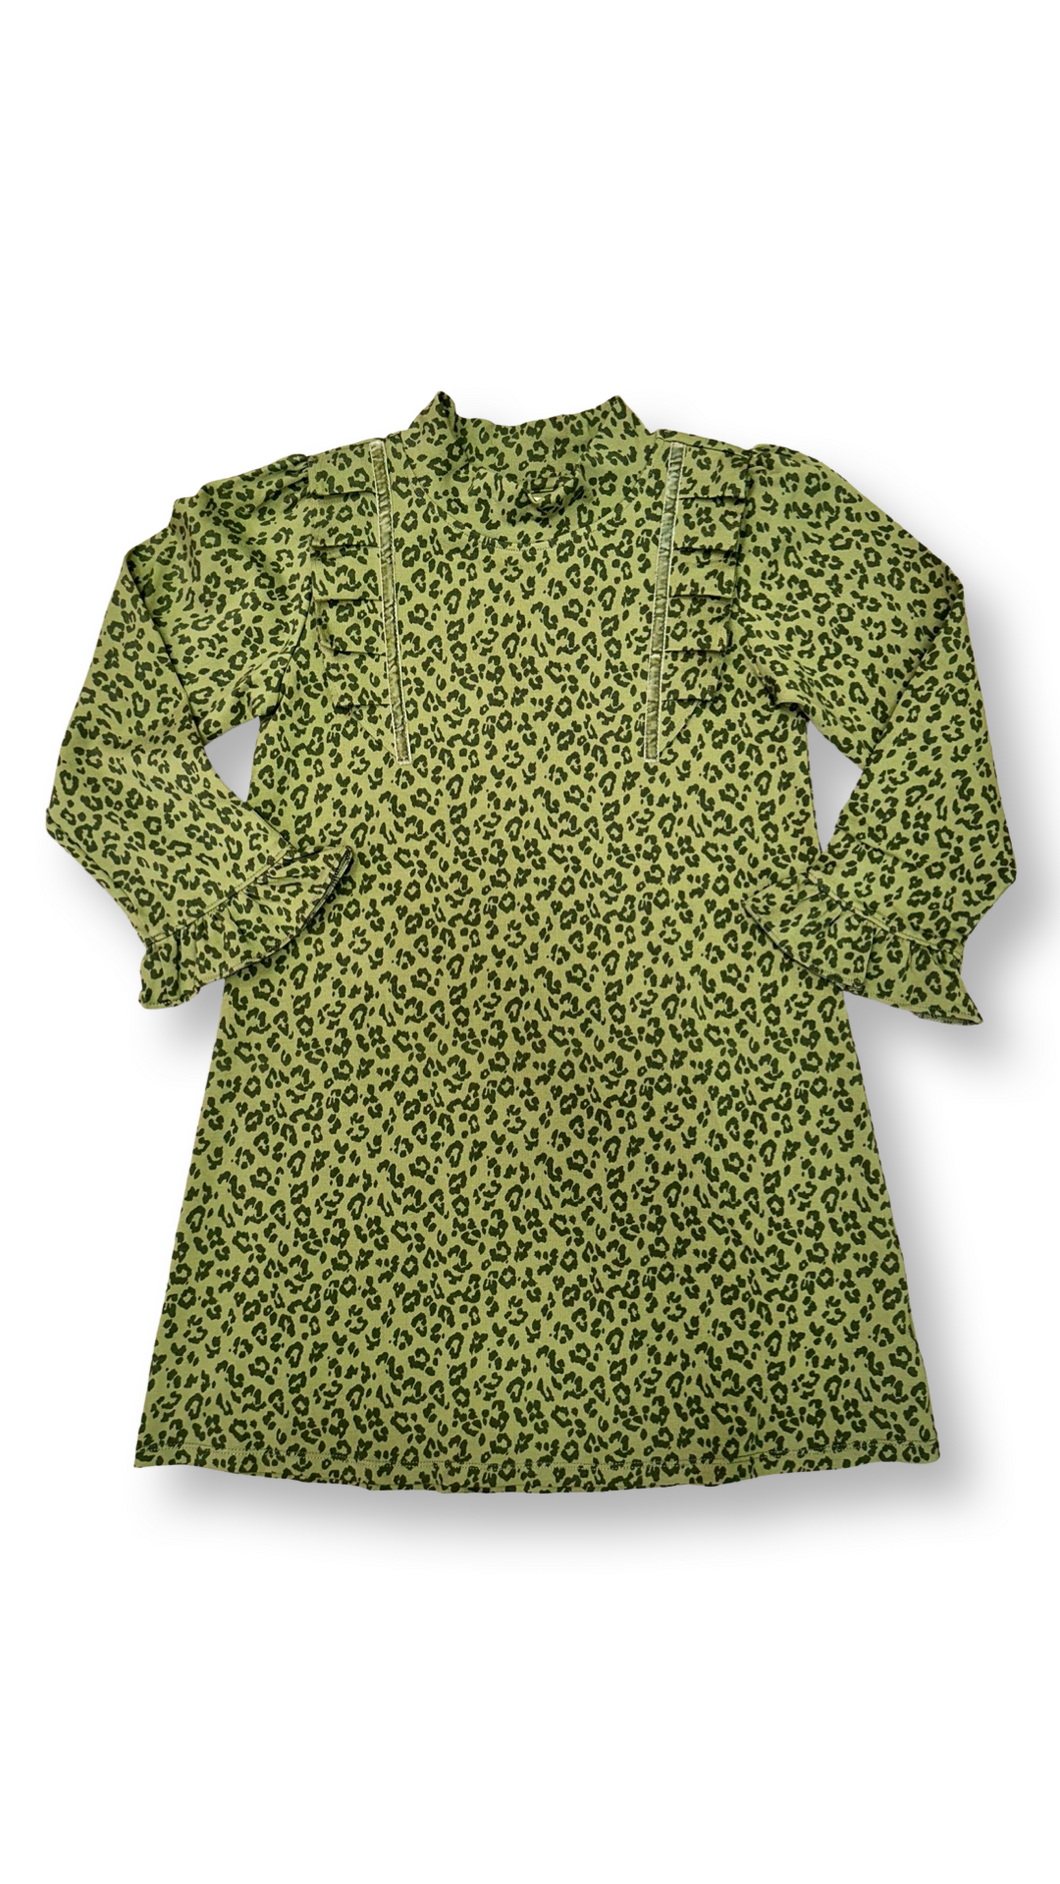 Olive Cheetah Dress